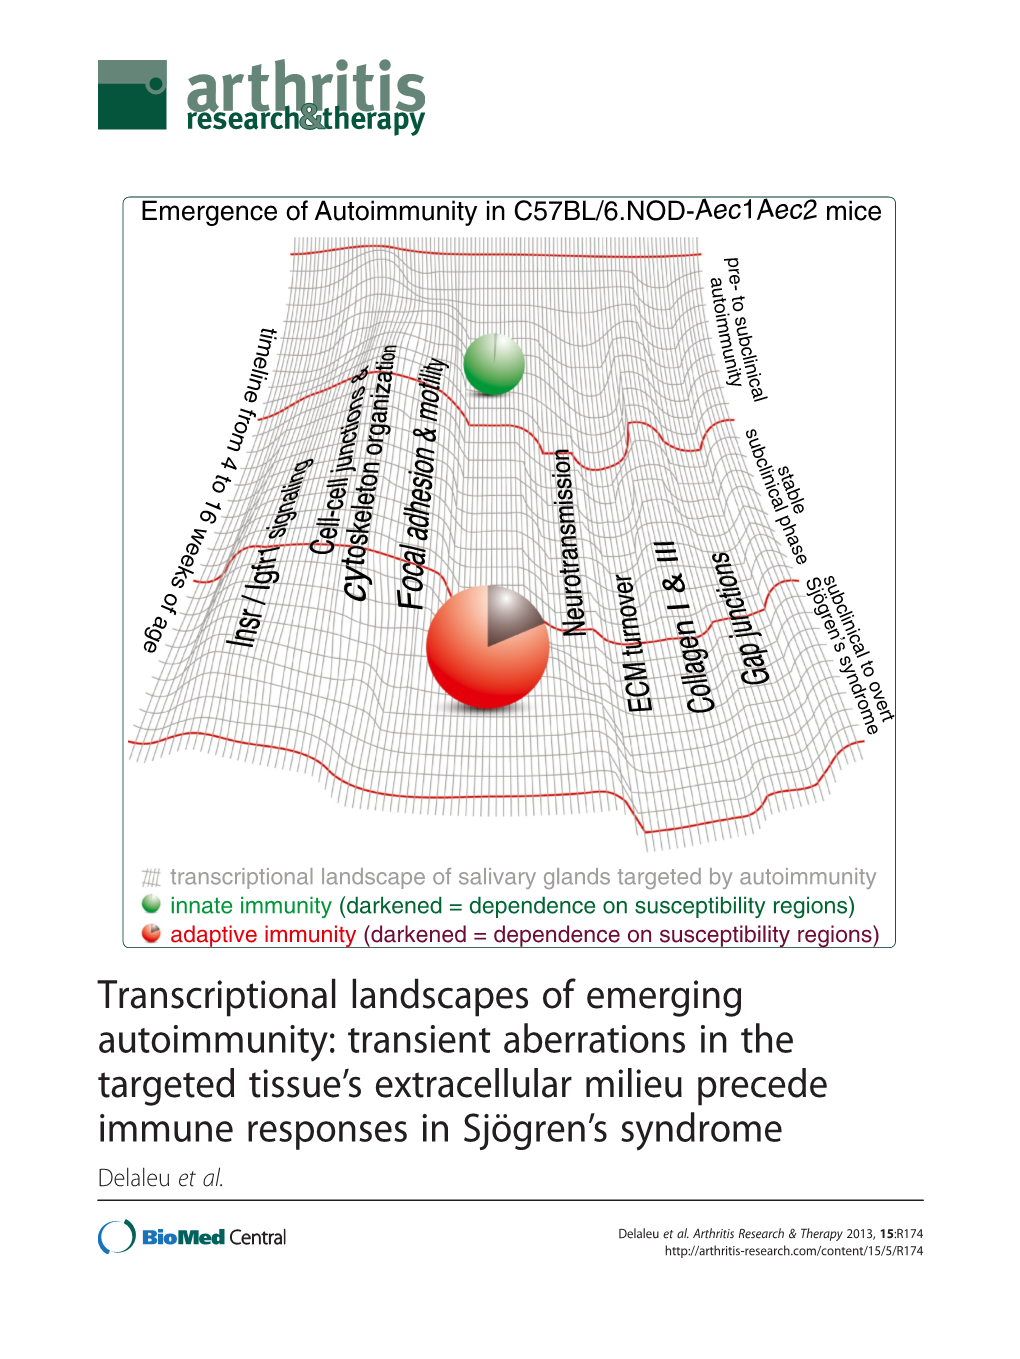 Transcriptional Landscapes of Emerging Autoimmunity